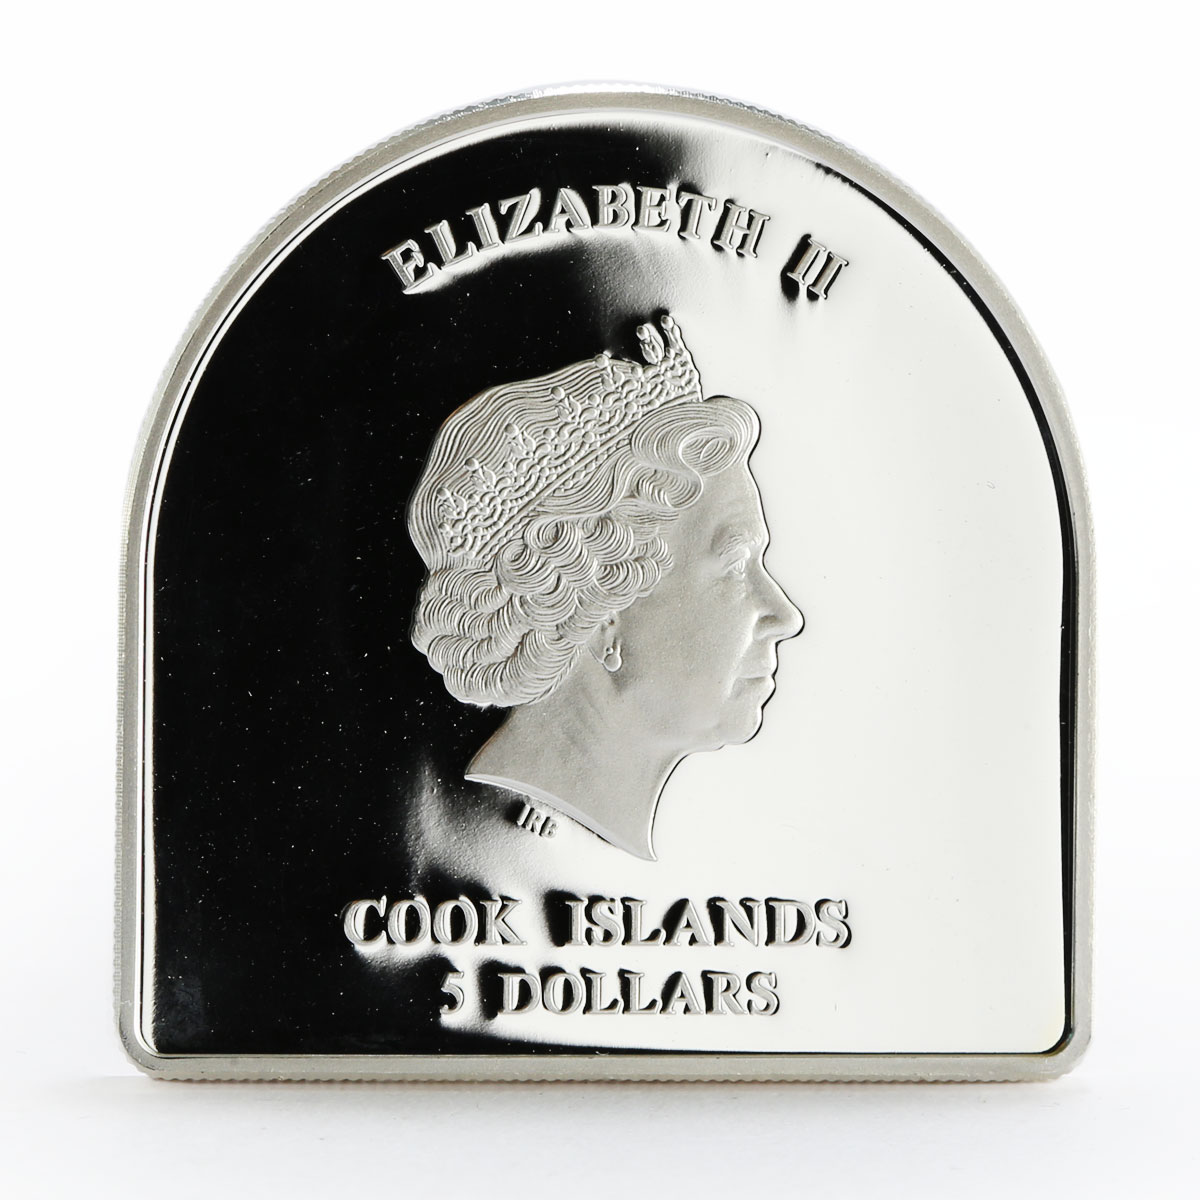 Cook Islands 5 dollars Concilium Vaticanium II gilded silver coin 2012